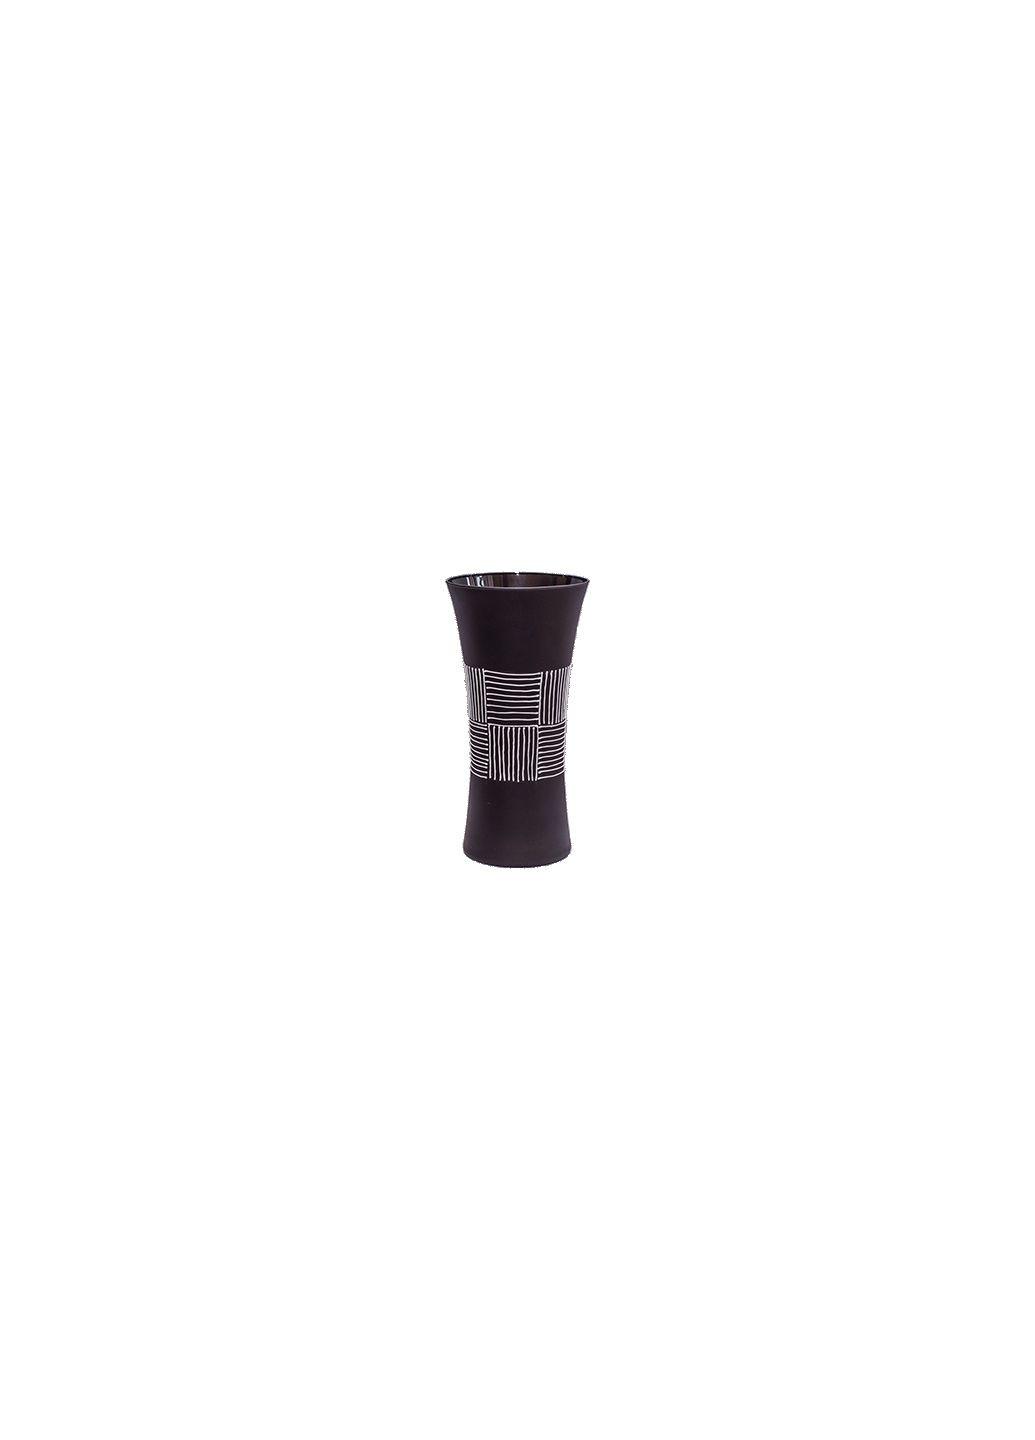 Ваза Доміно чорна 28,5 см Х029 domino black GlassStyle (273218013)